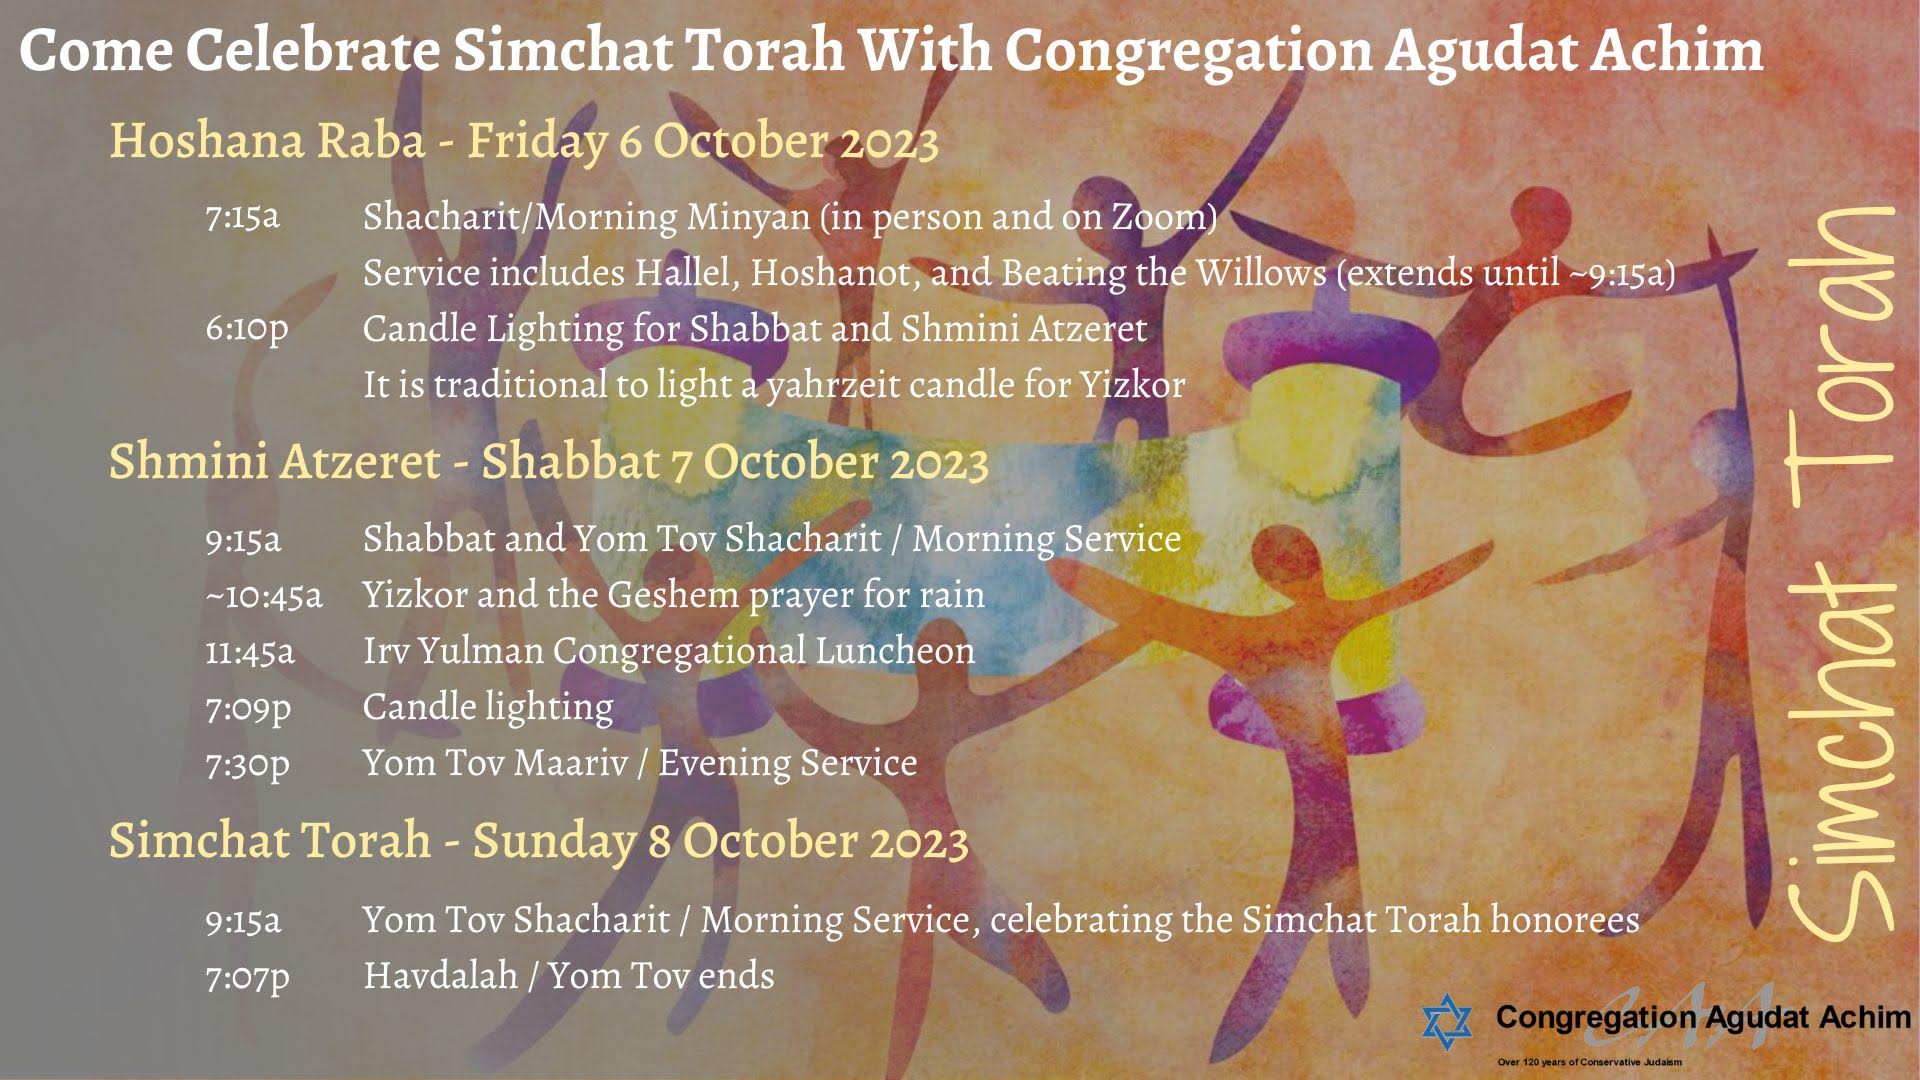 Come Celebrate Simchat Torah With Congregation Agudat Achim